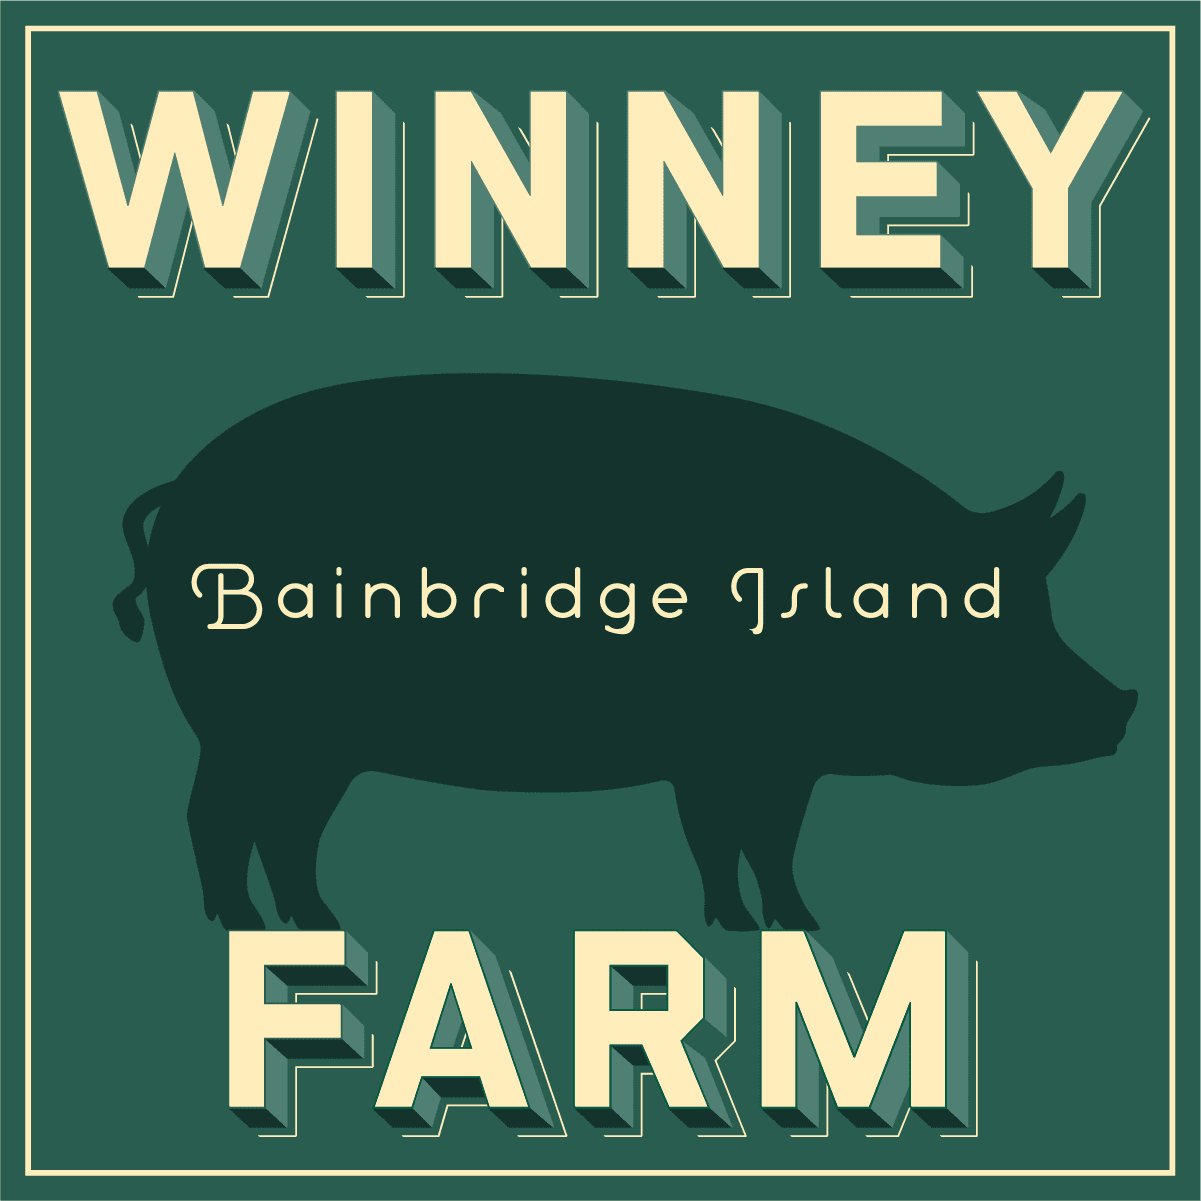 Winney Farm